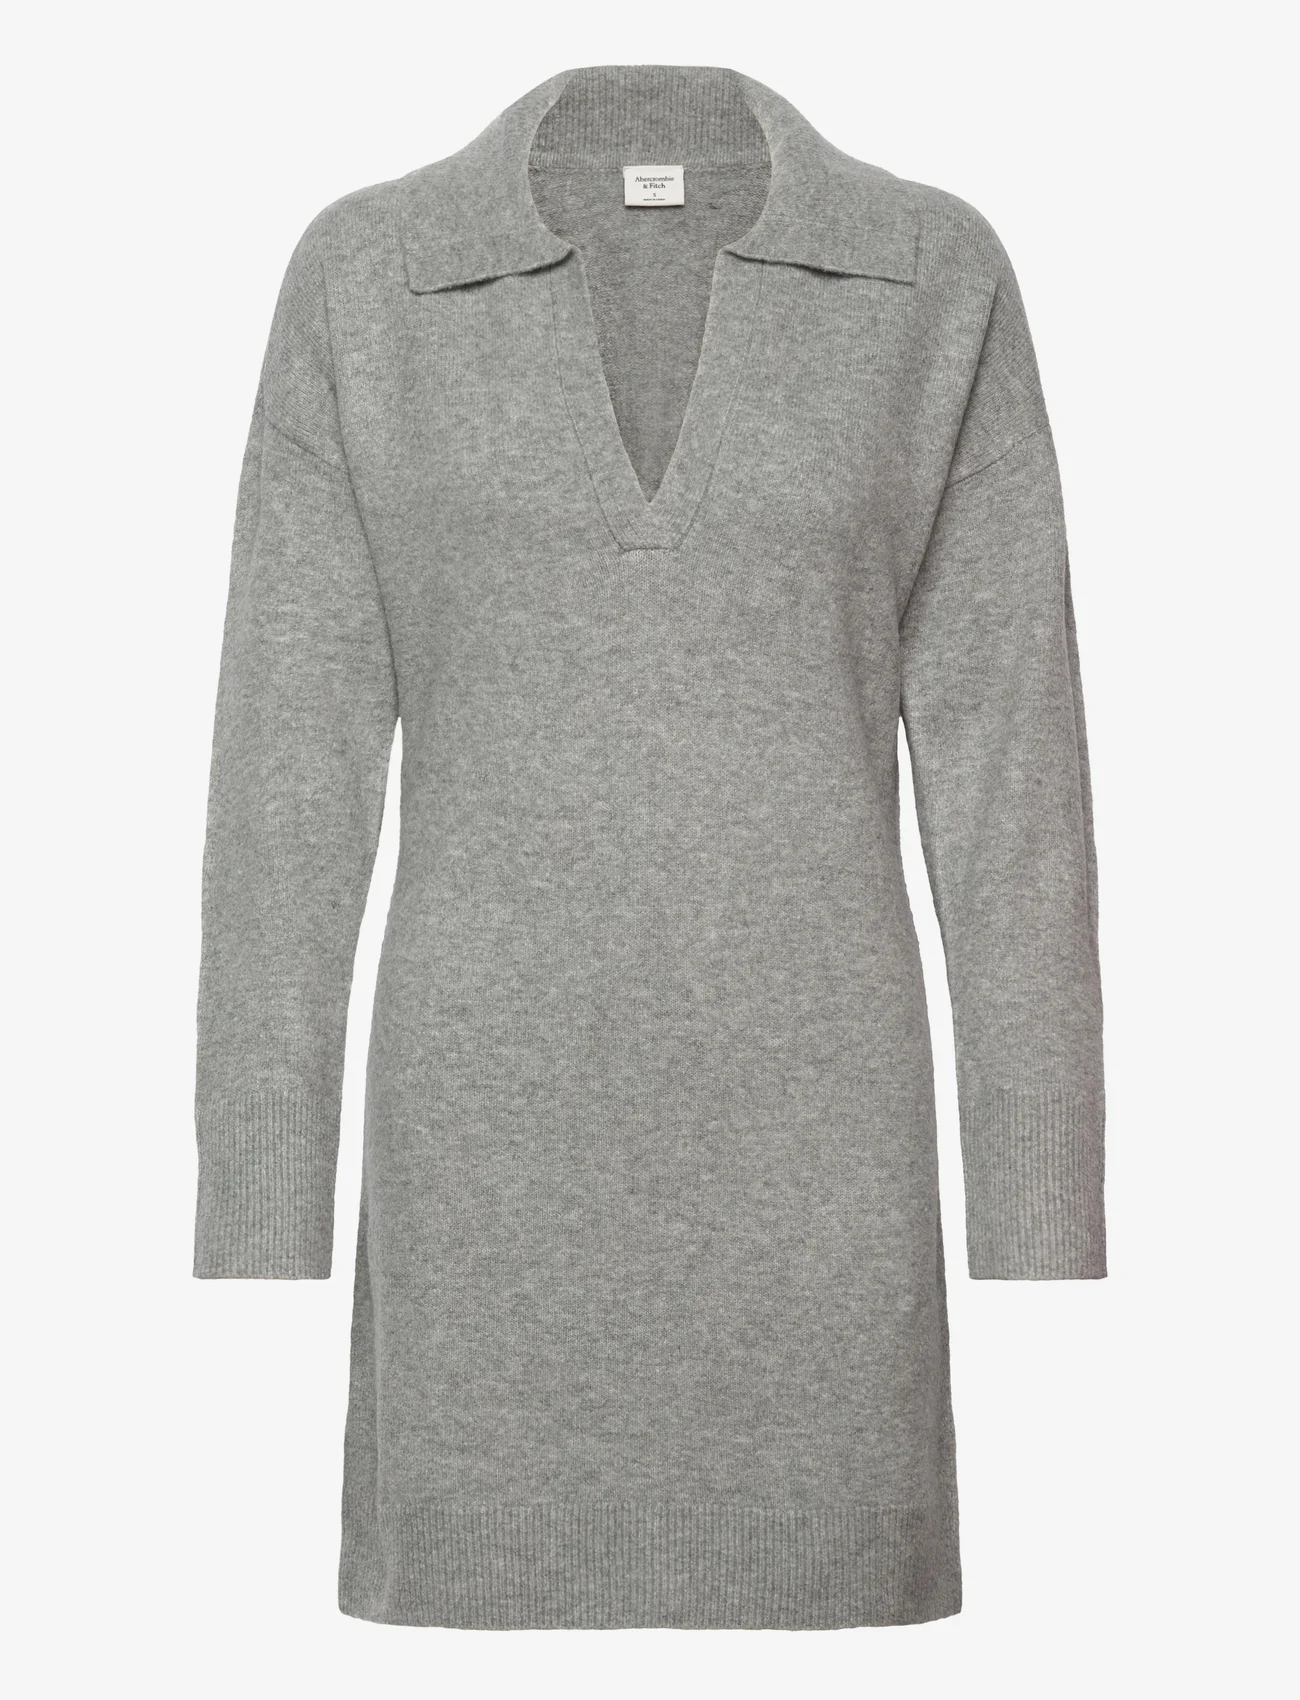 Abercrombie & Fitch - ANF WOMENS DRESSES - sukienki dzianinowe - gray heather - 0